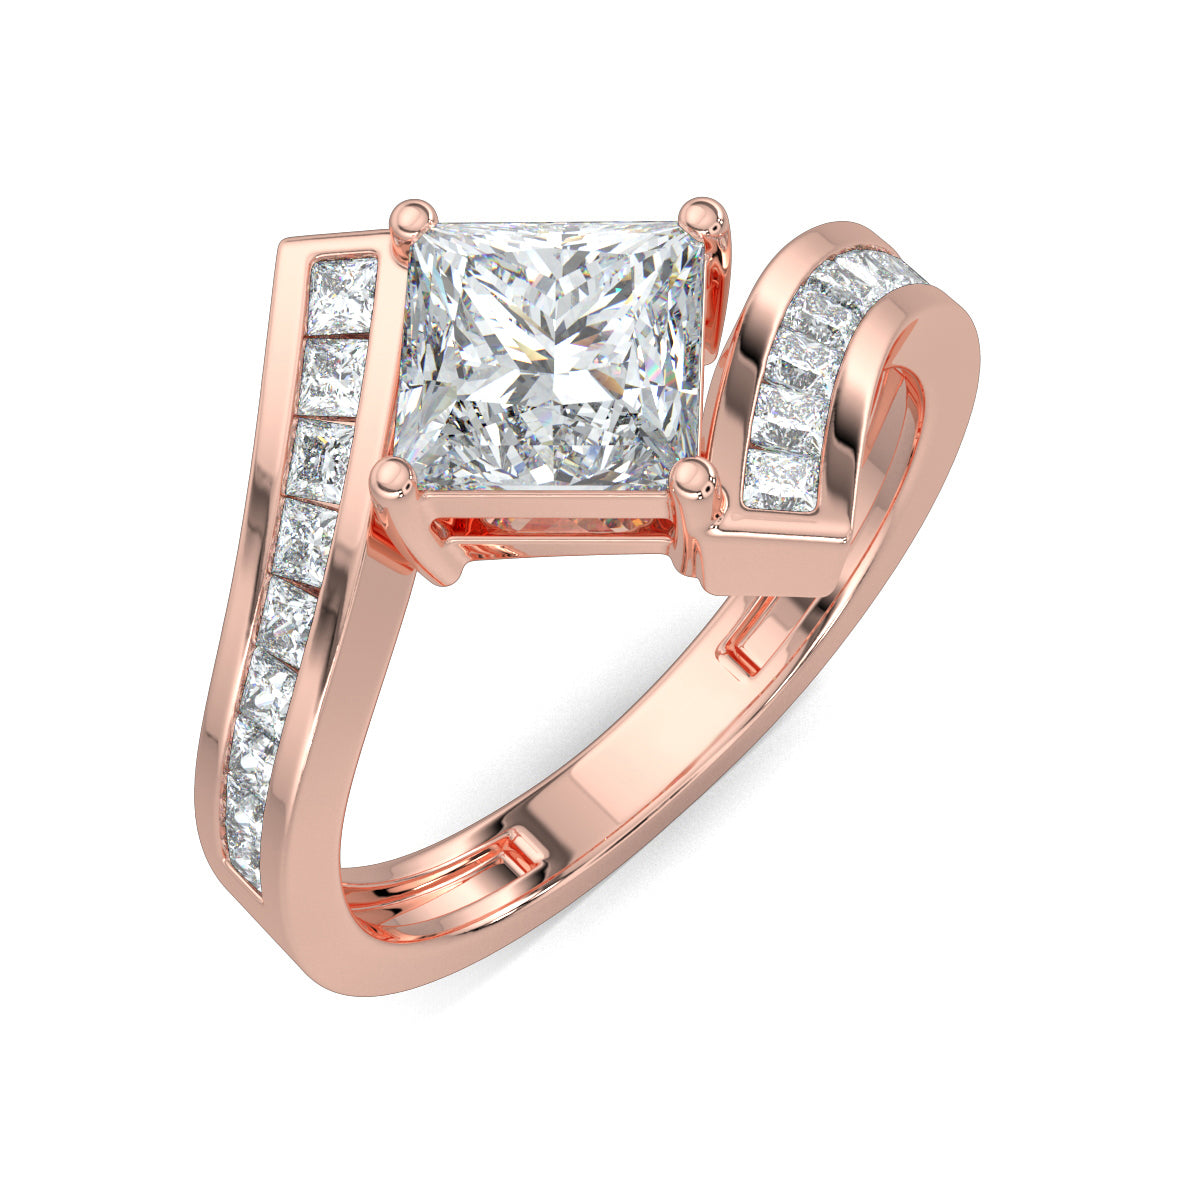 Rose Gold, Diamond Ring, princess solitaire ring, princess-cut diamond, Natural diamonds, lab-grown diamonds, solitaire engagement ring, ethical jewelry, timeless elegance, regal design, luxury ring